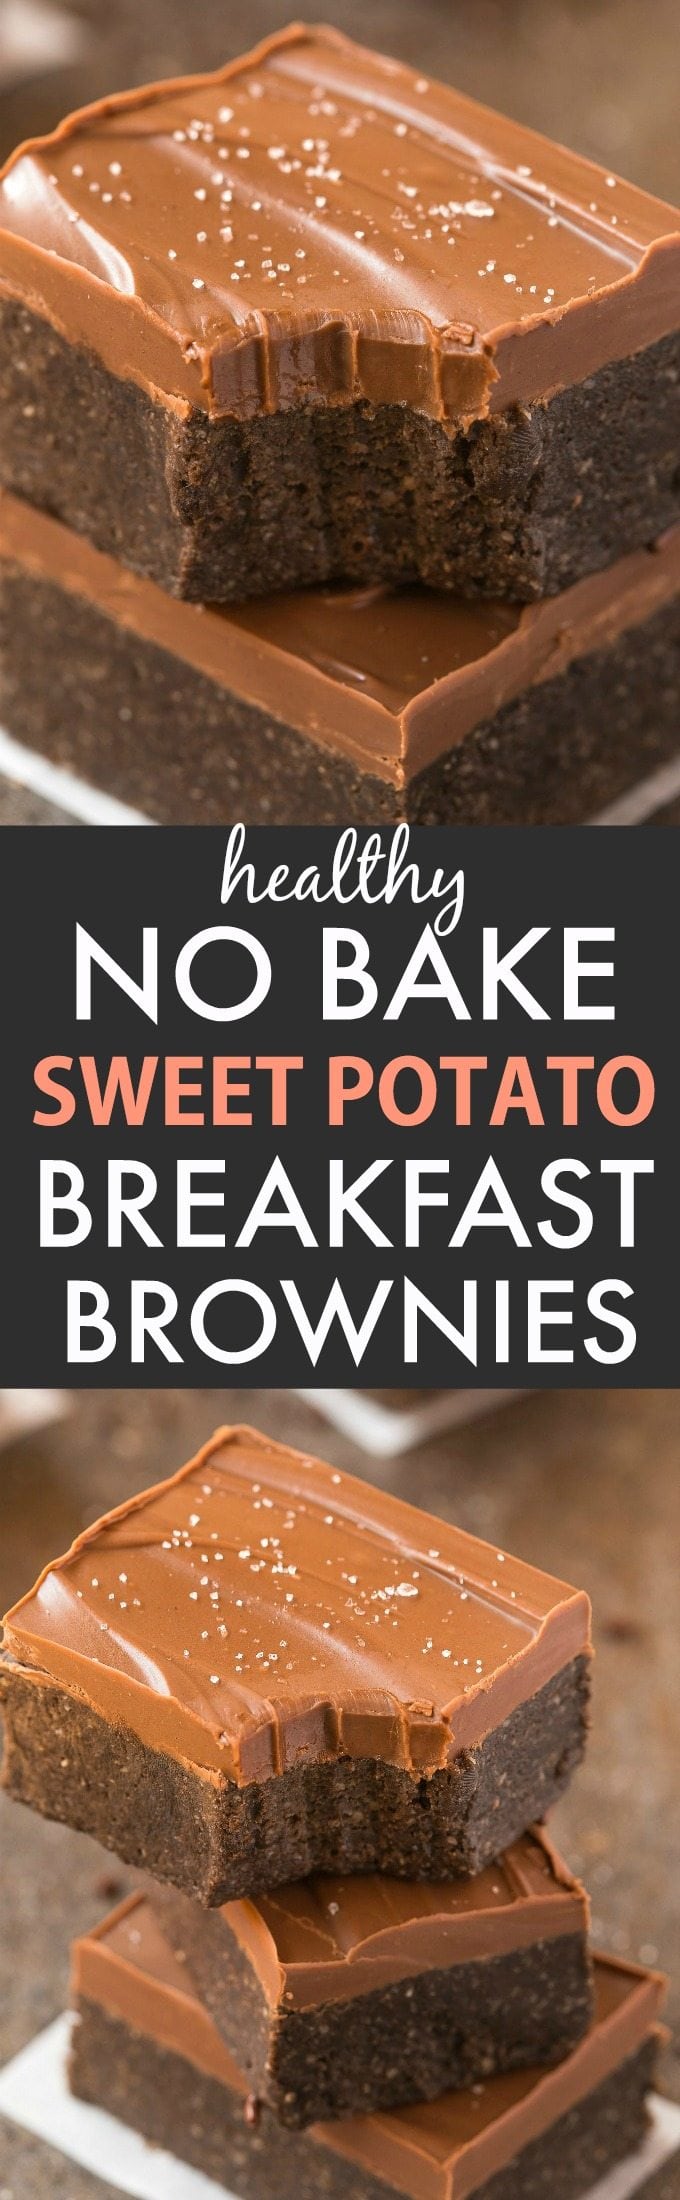 No bake sweet potato breakfast brownies (paleo, vegan, gluten free)